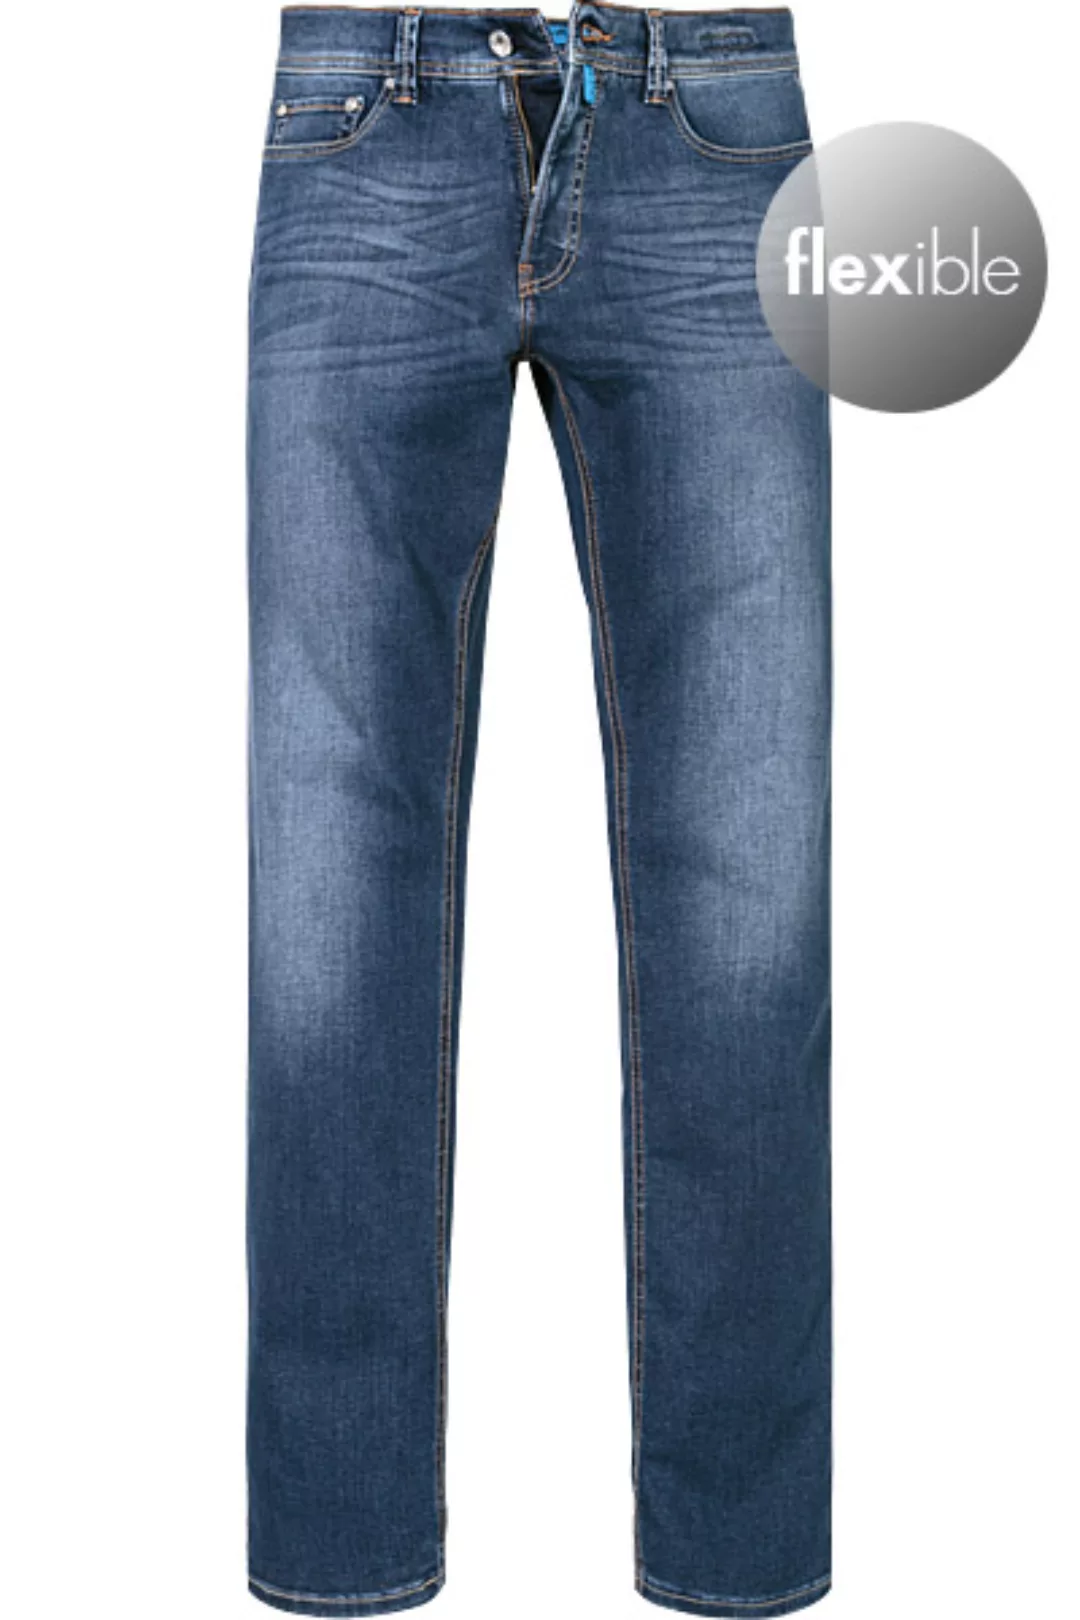 Pierre Cardin Jeans Lyon 03451/000/08880/01 günstig online kaufen